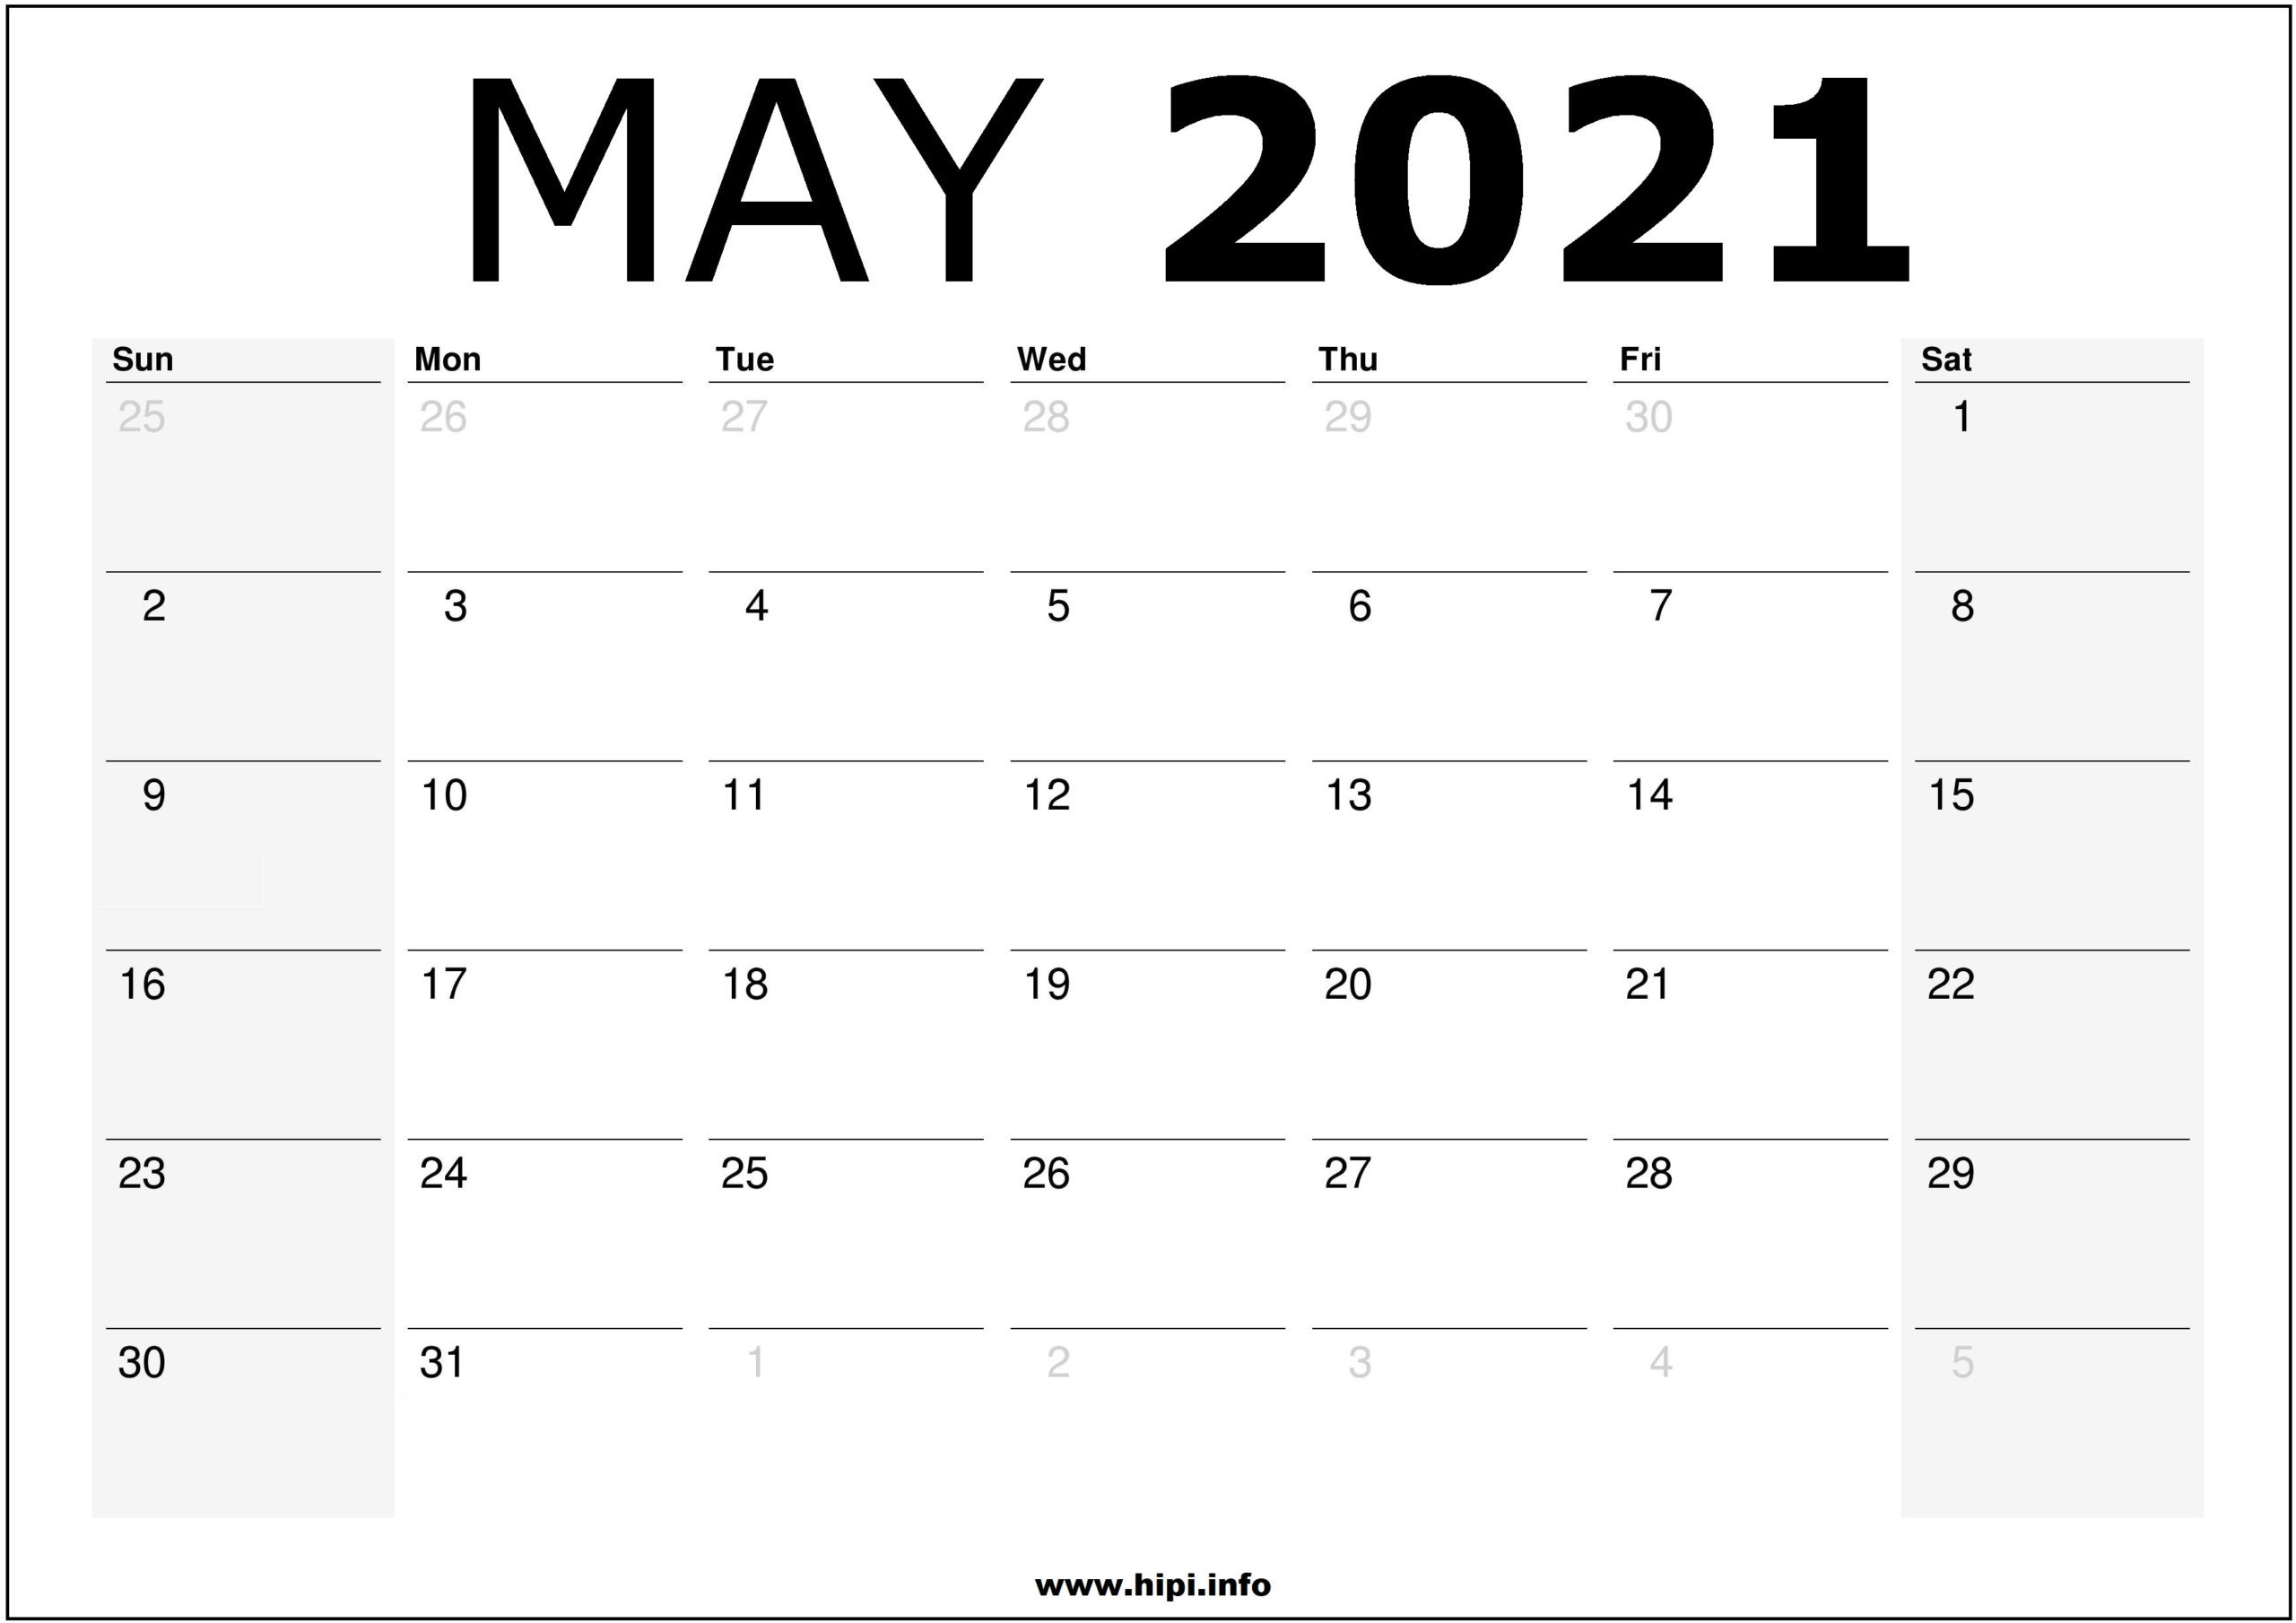 May 2021 Calendar Printable - Monthly Calendar Free  July Calendars Free Printable Without Downloading